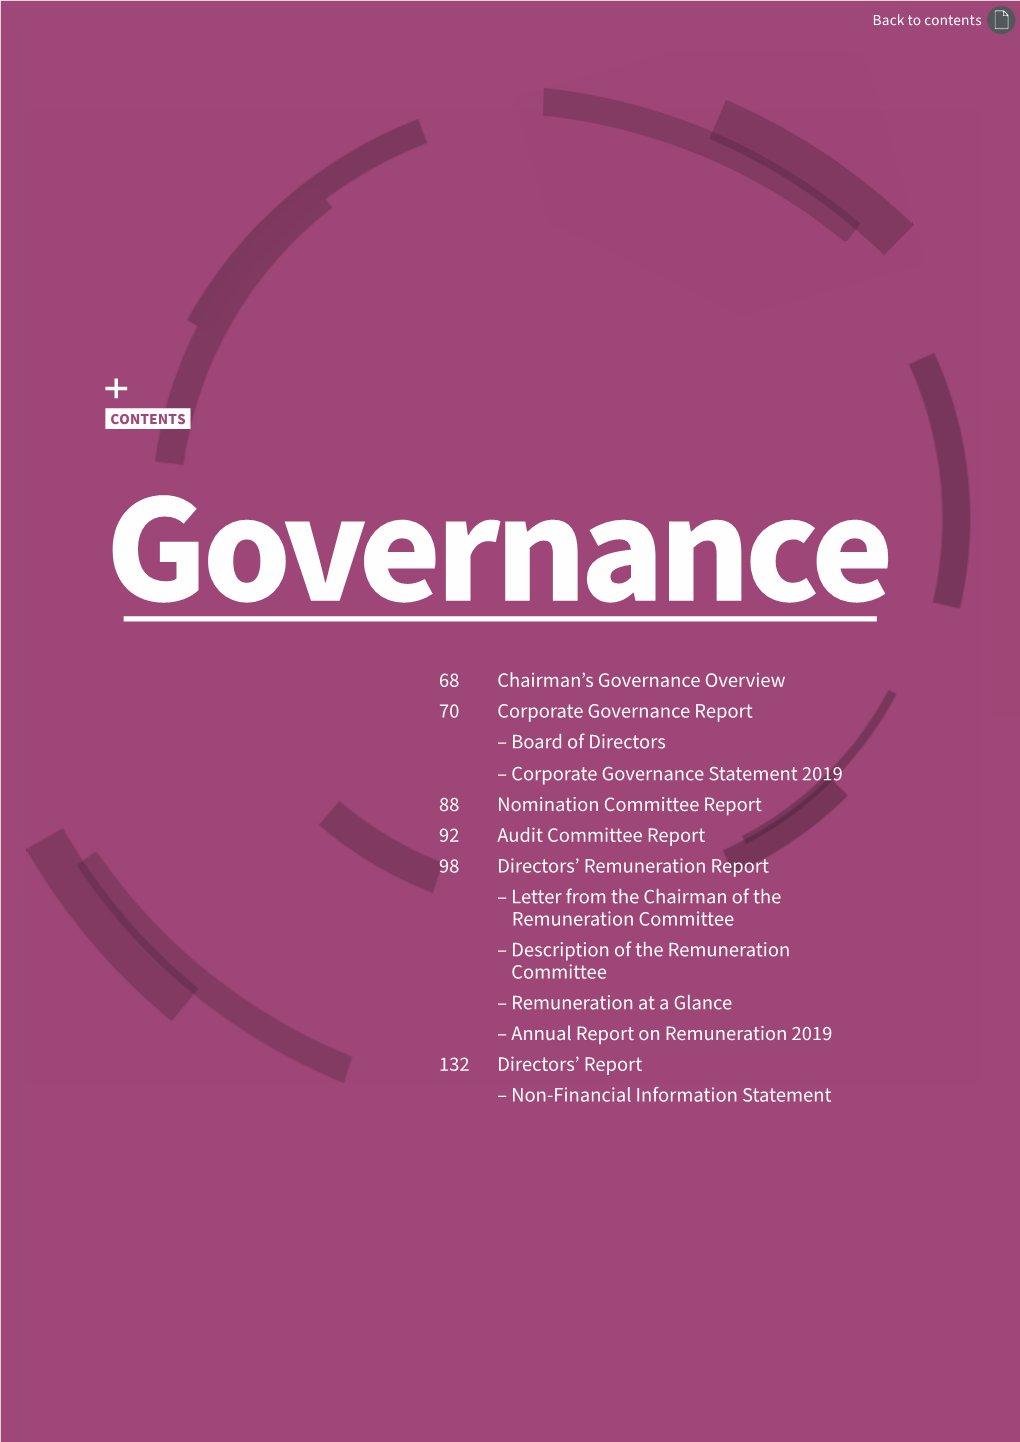 Corporate Governance Statement